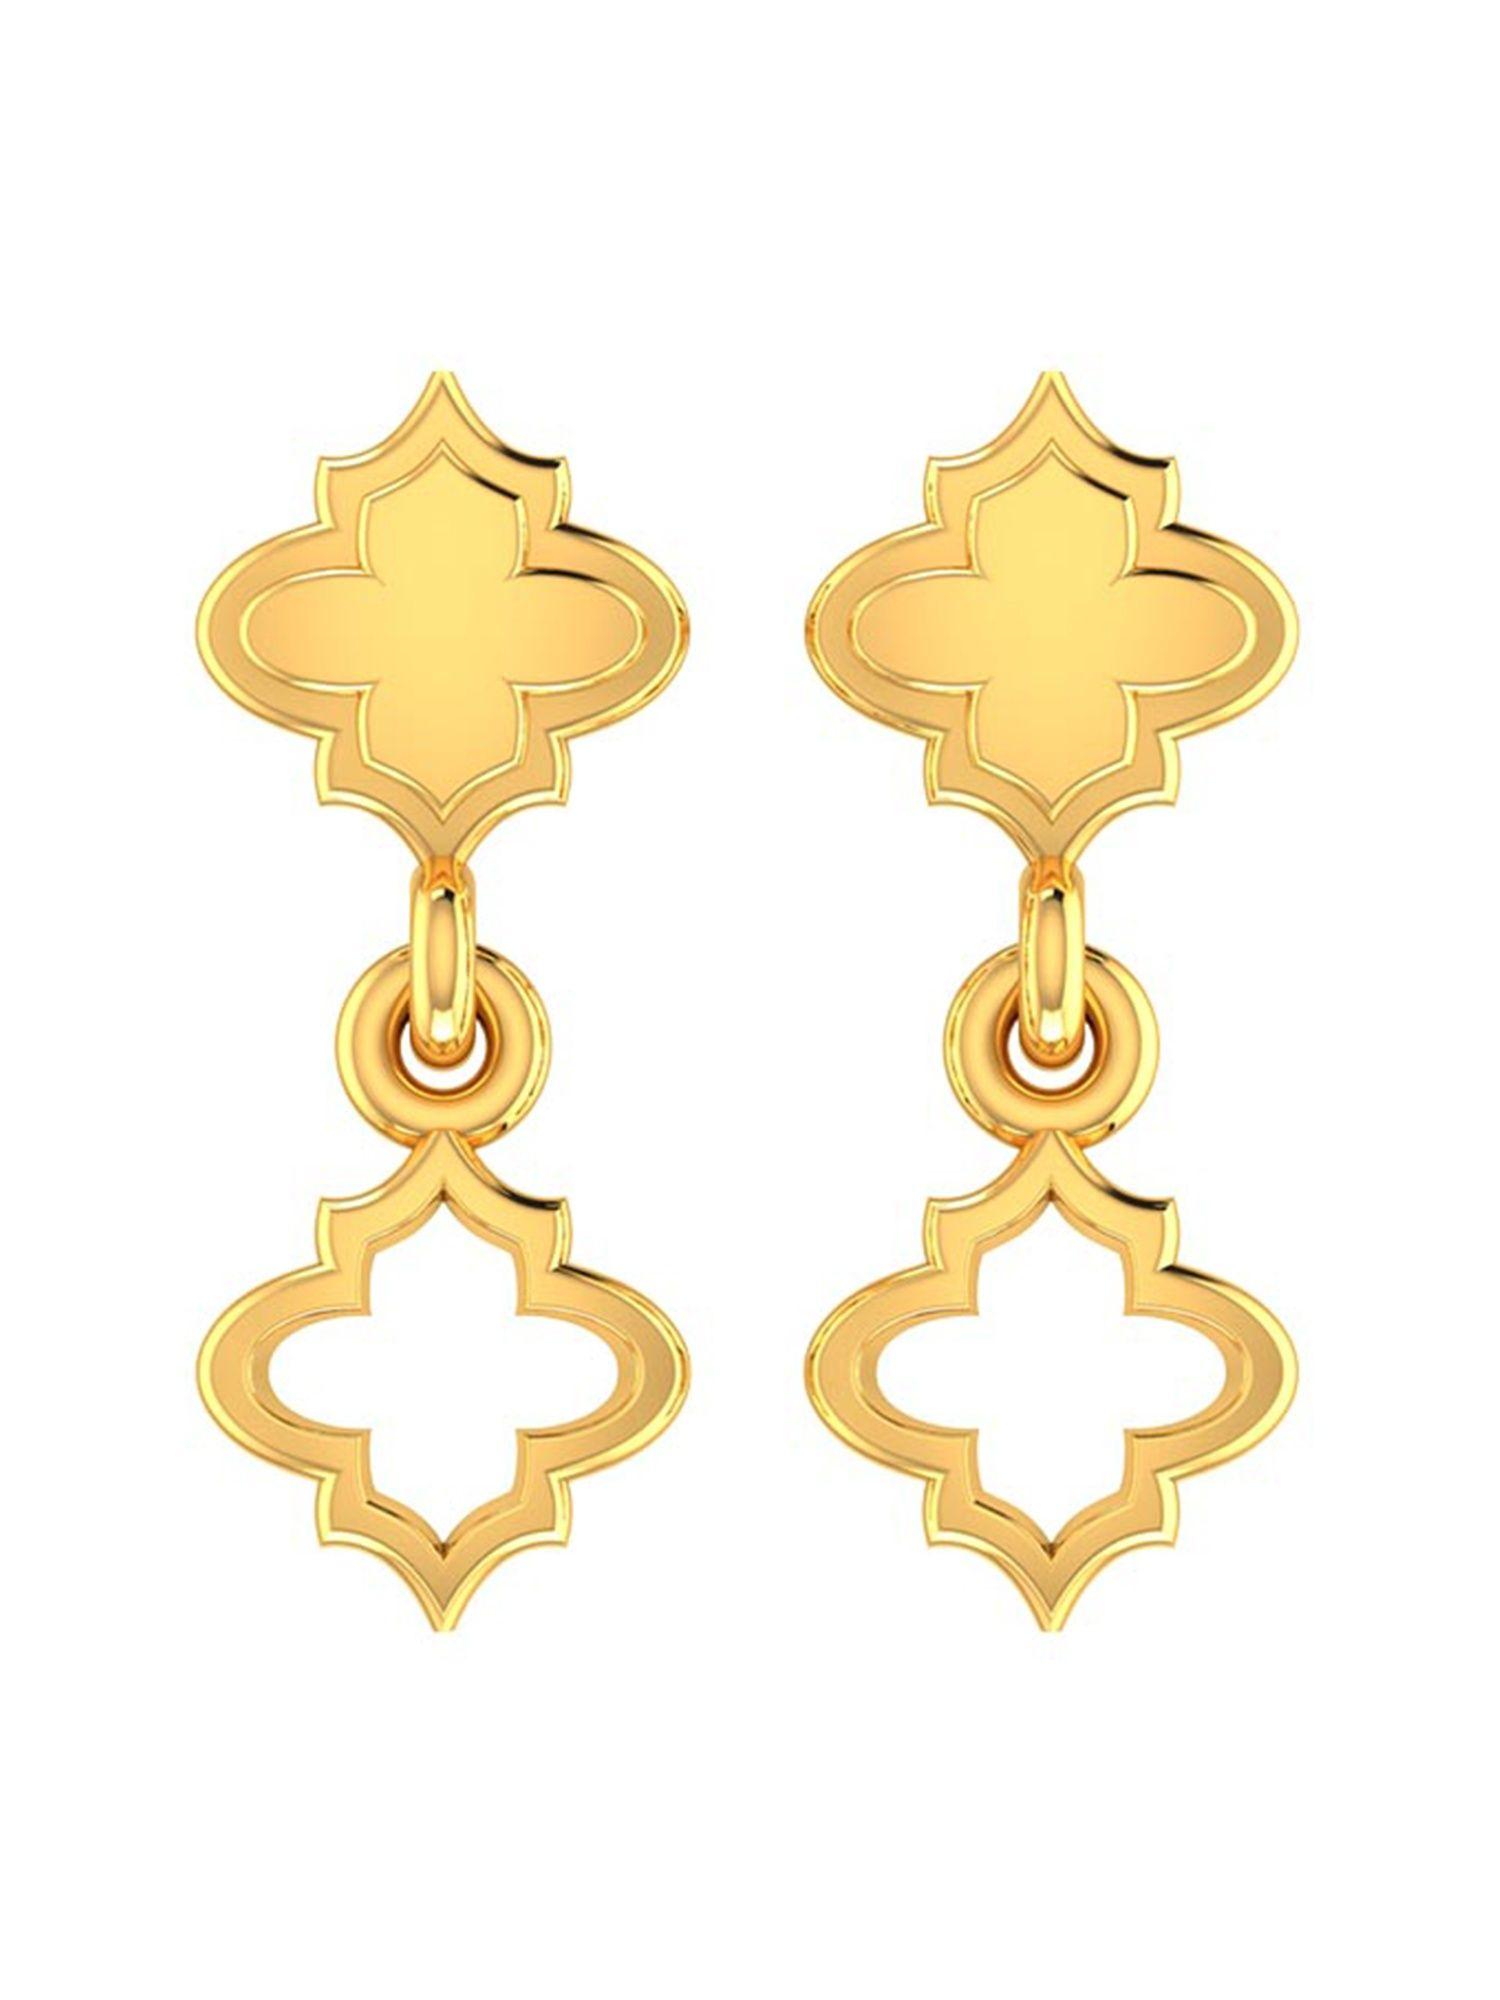 meshy-affair-drops-&-danglers-gold-earrings-with-gold-screw